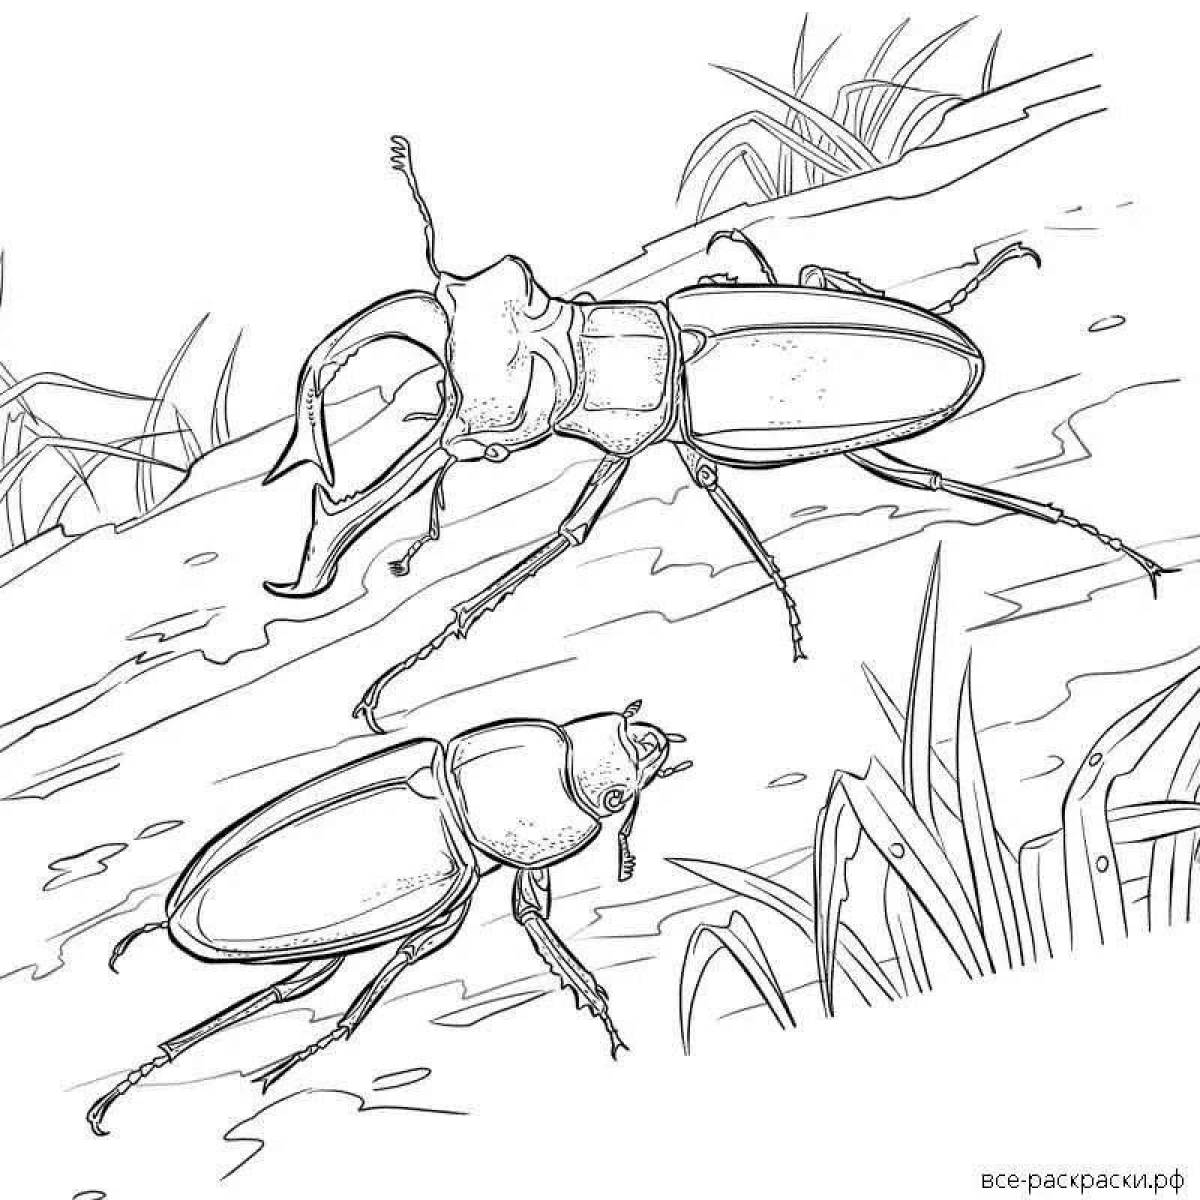 Stag beetle #17